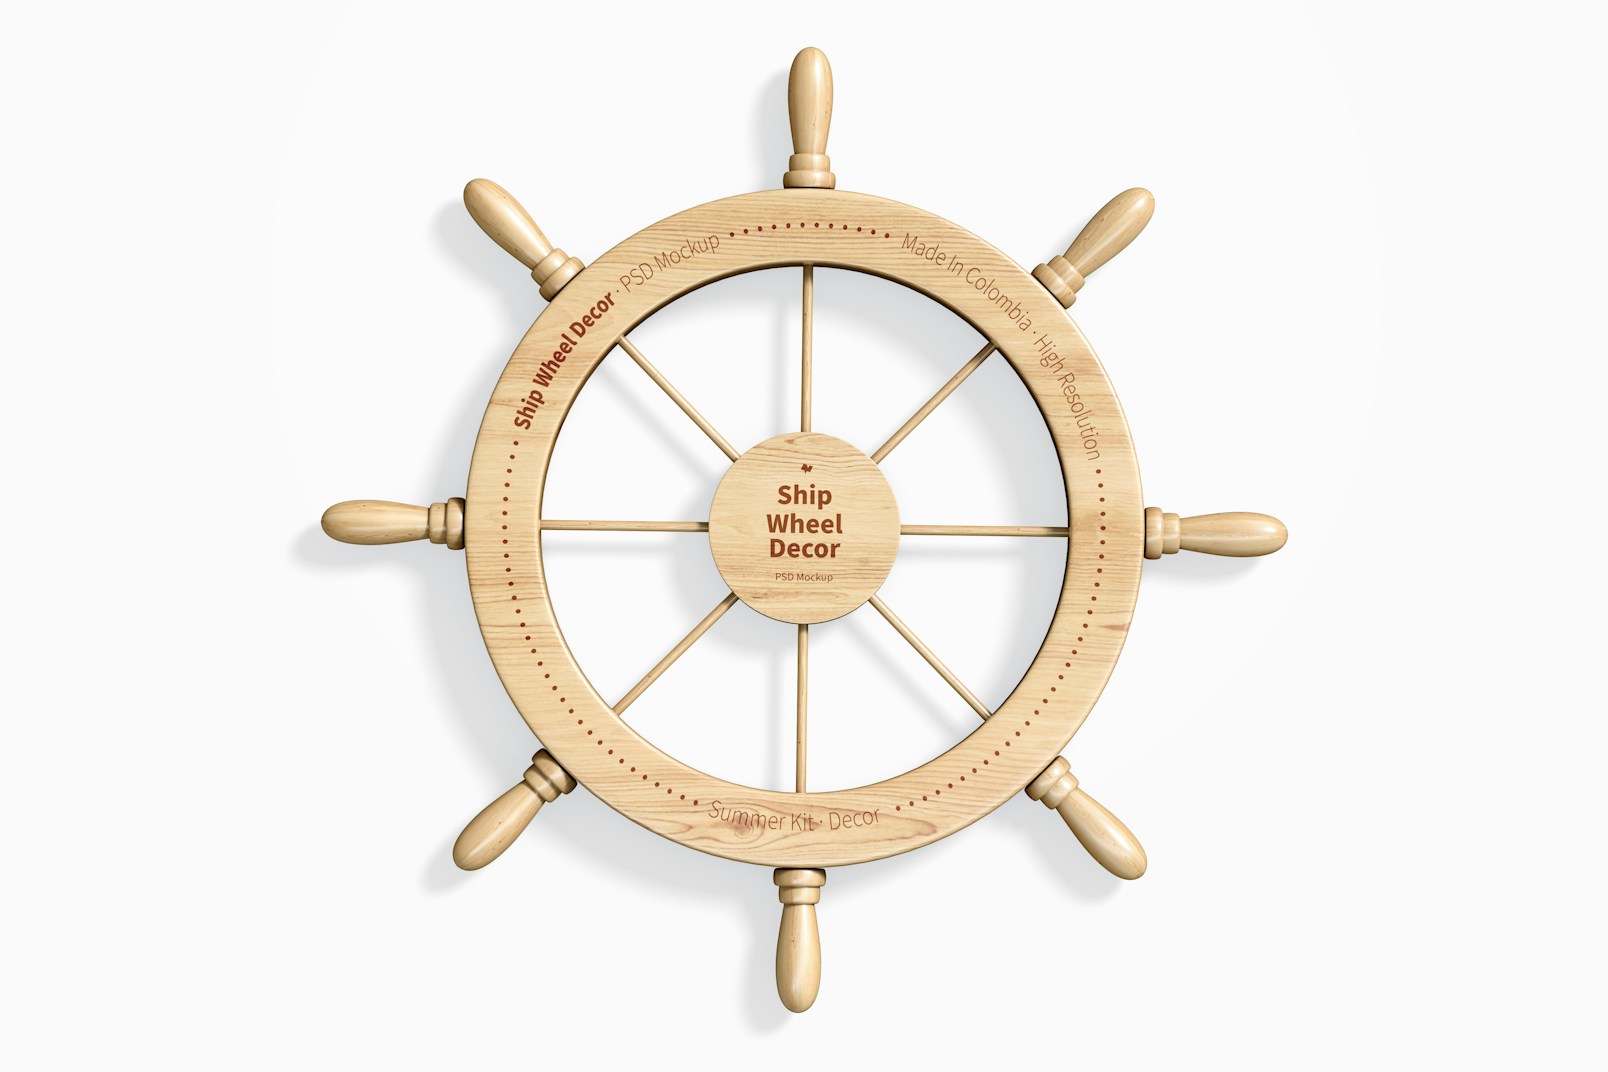 Ship Wheel Decor Mockup